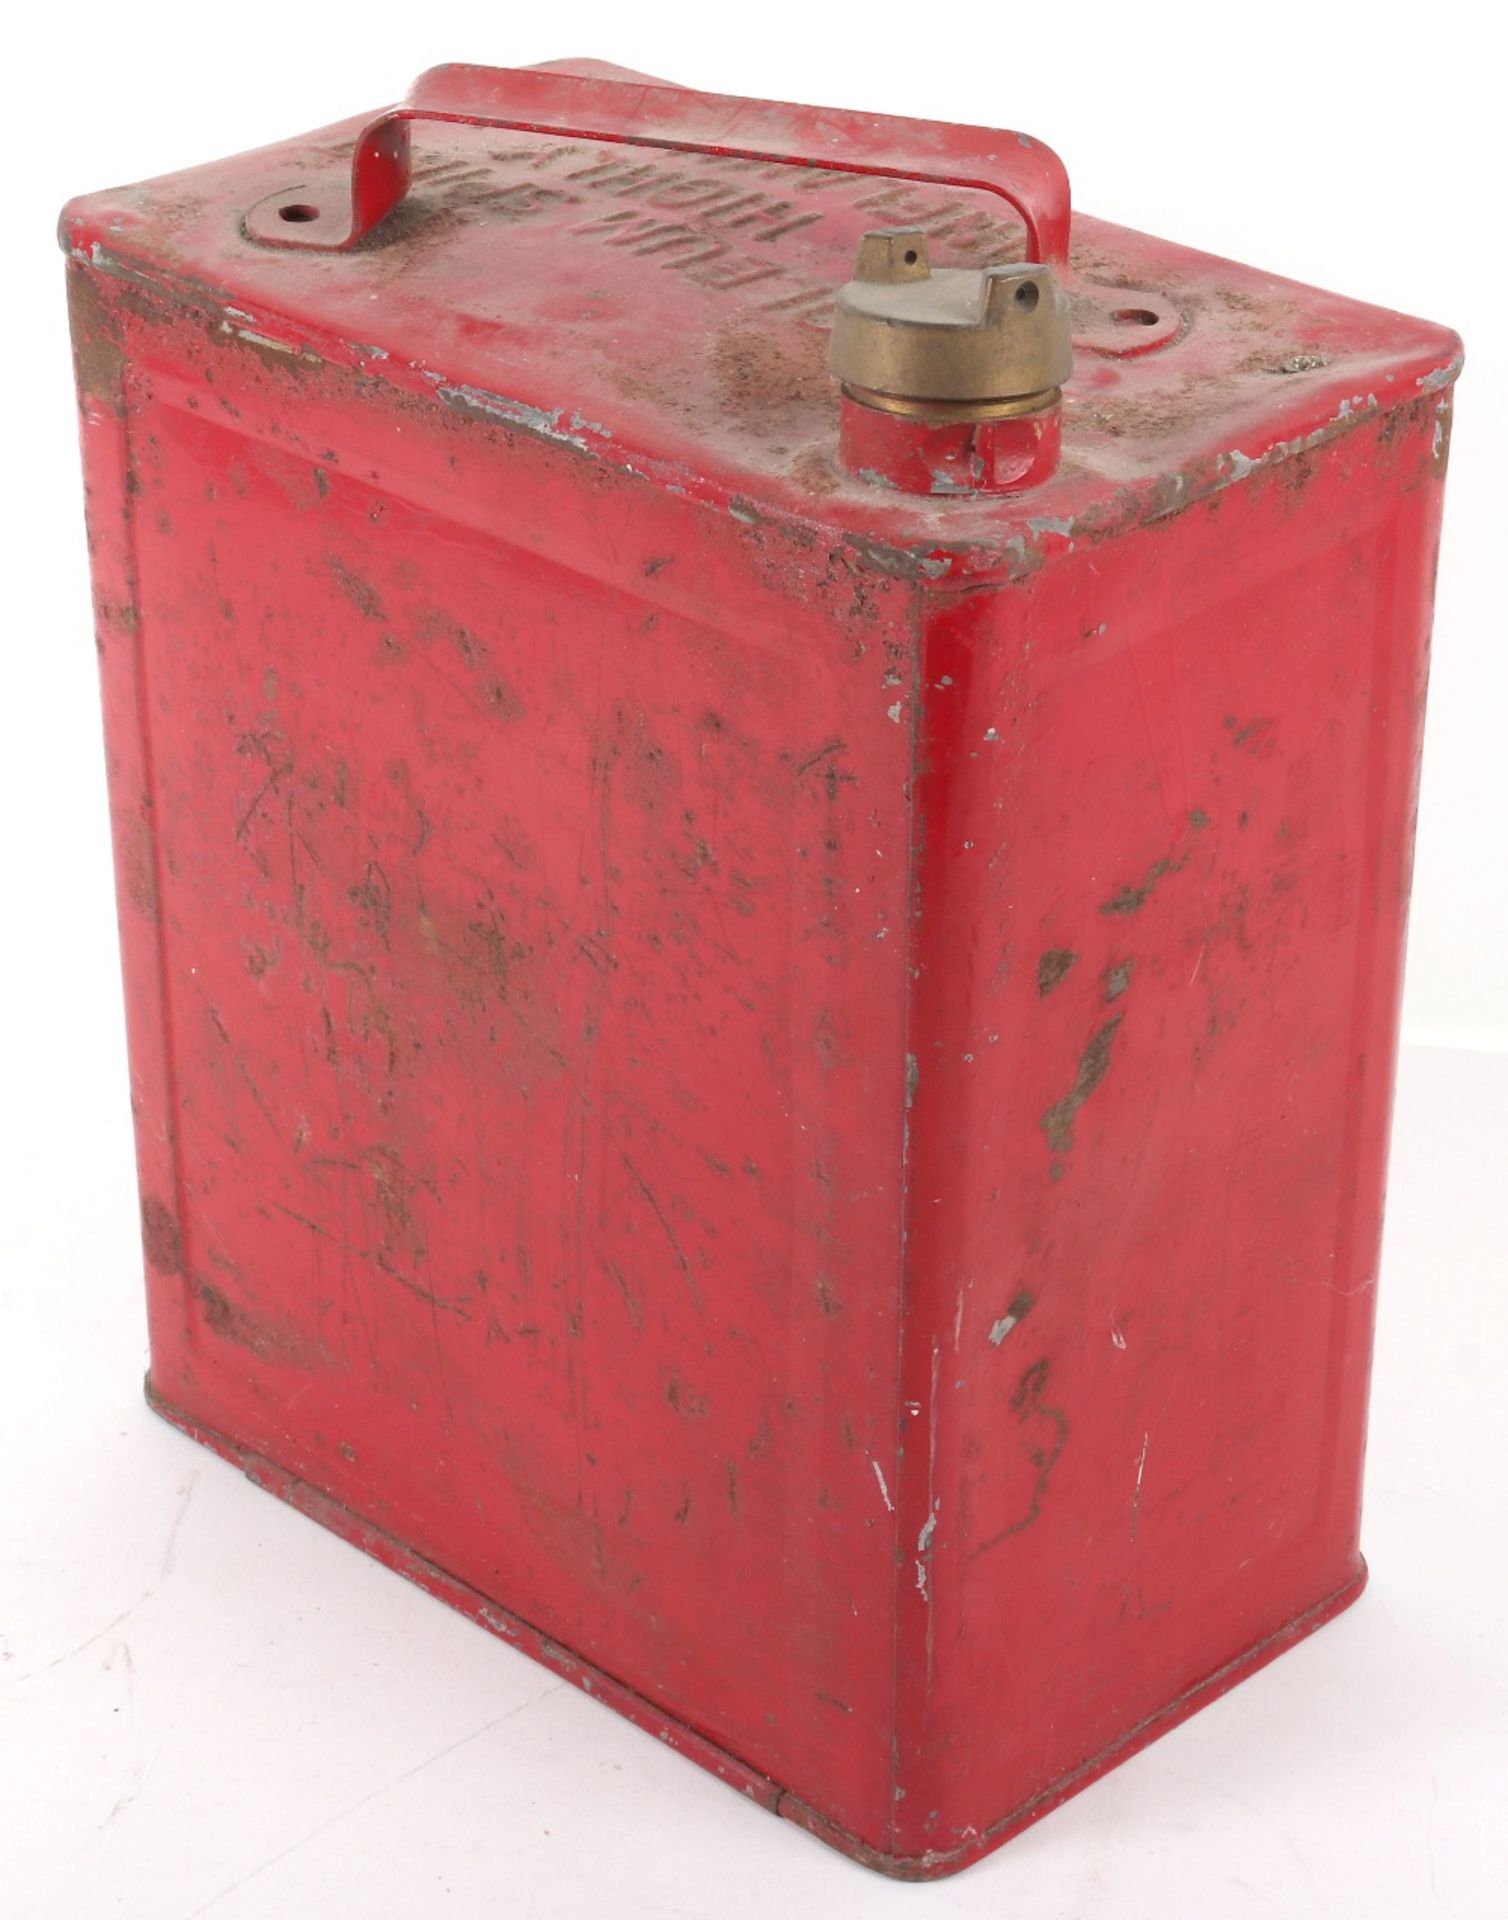 Vintage Petrol Can and Ephemera - Image 8 of 8